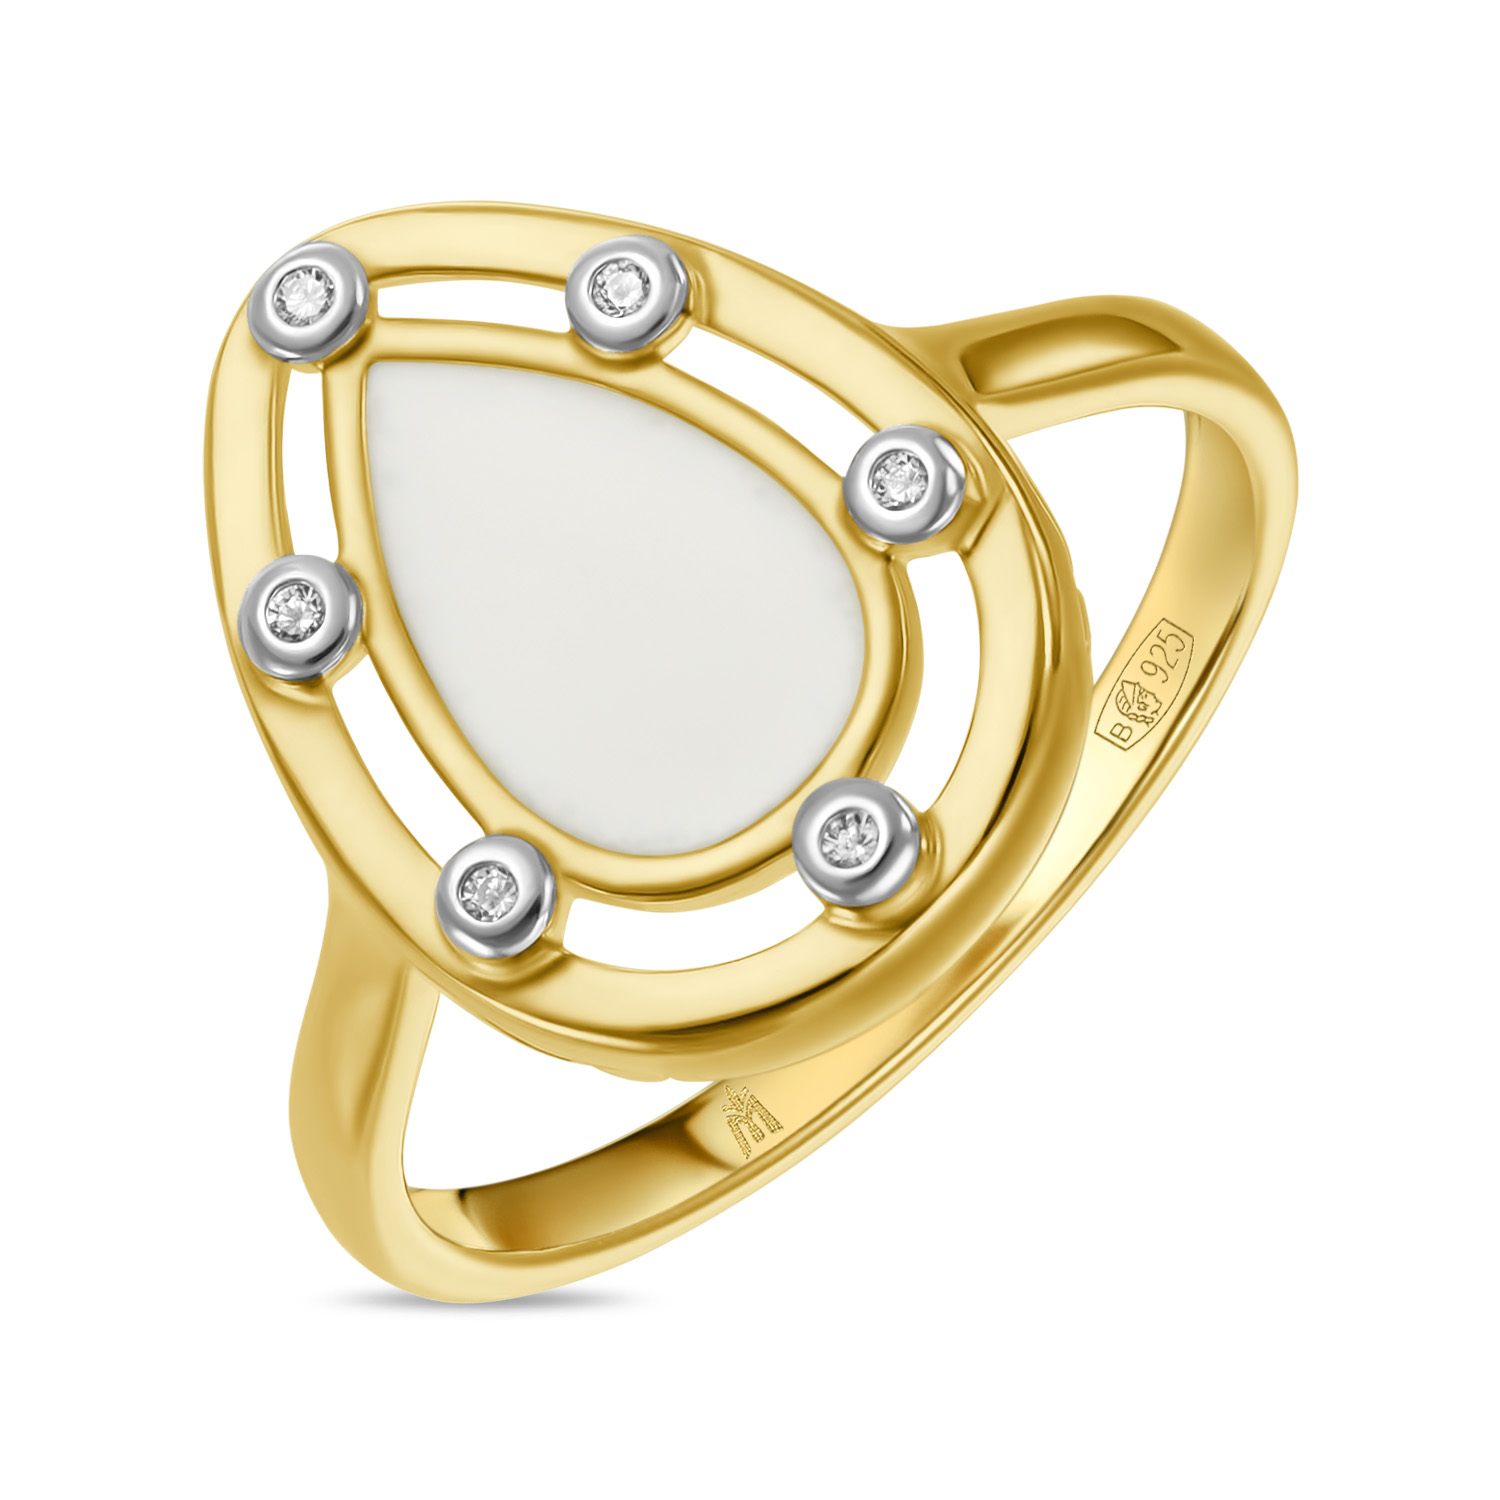 Кольца МЮЗ Кольцо с эмалью и фианитами кольца мюз кольцо с эмалью и фианитами